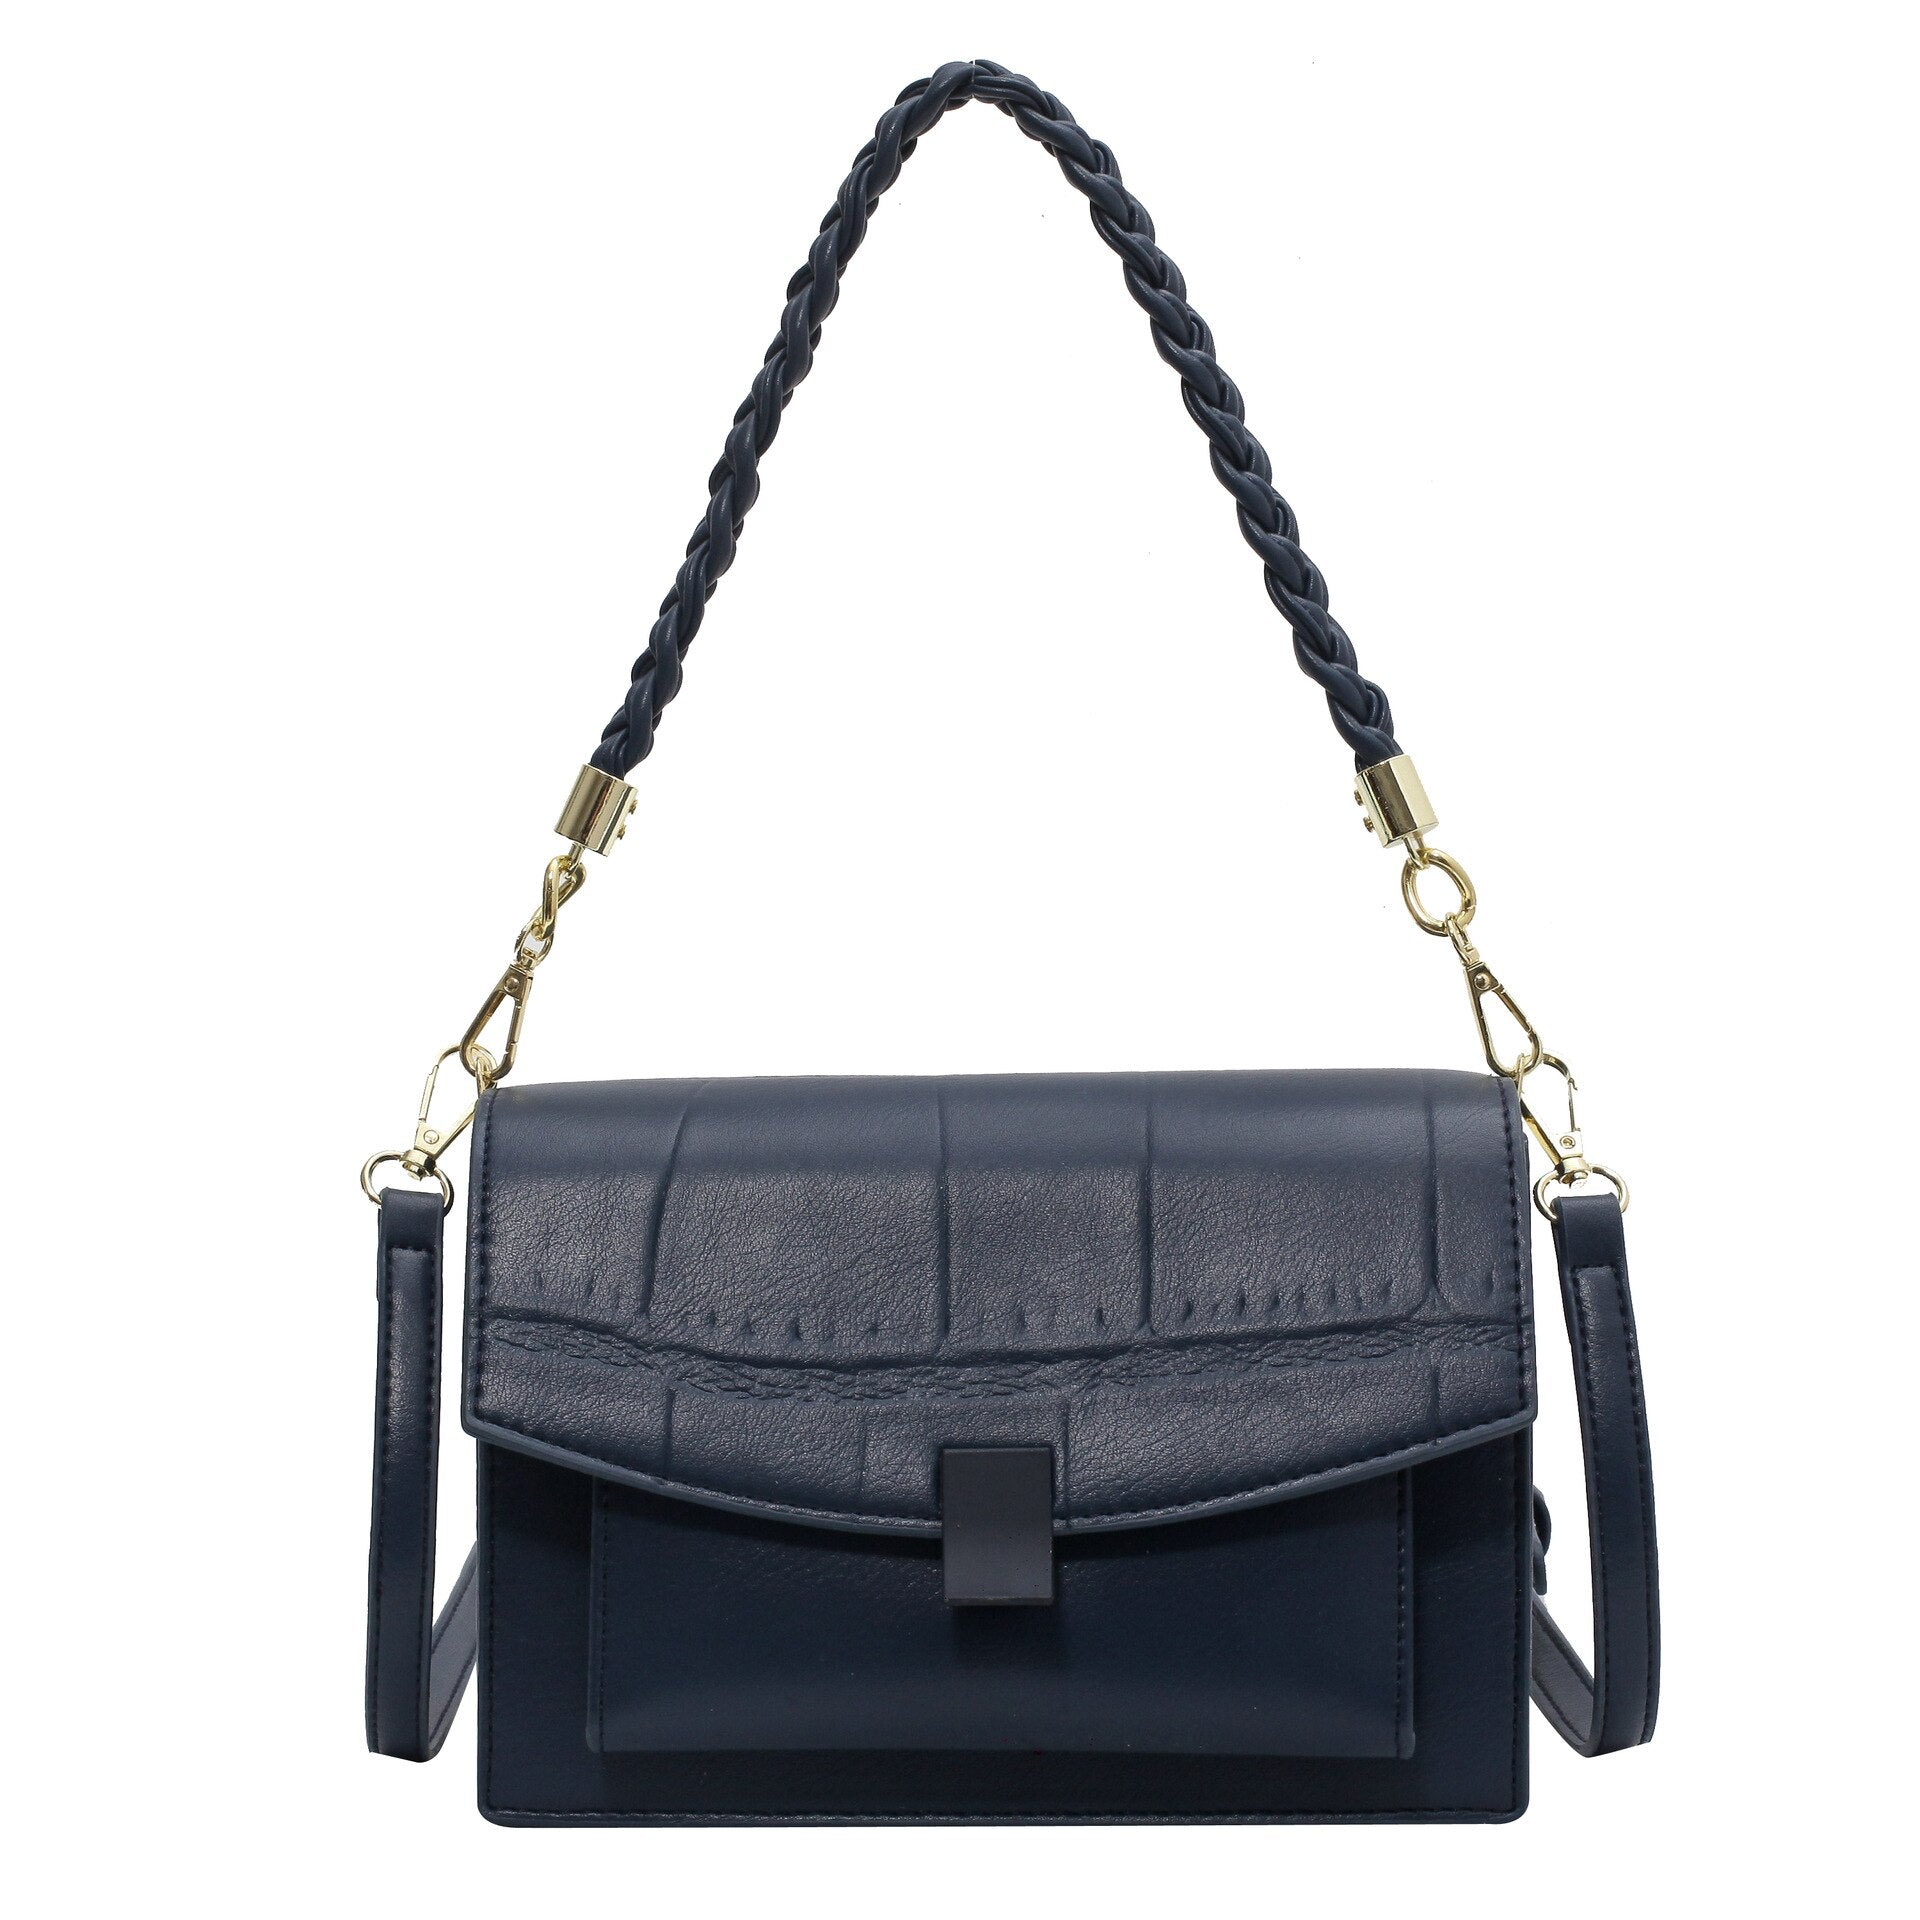 Fashion Casual Women's Handbags Shoulder Messenger Bags for Women 2020 Designer Tote Lady Leather Crossbody Bag purses crossbody